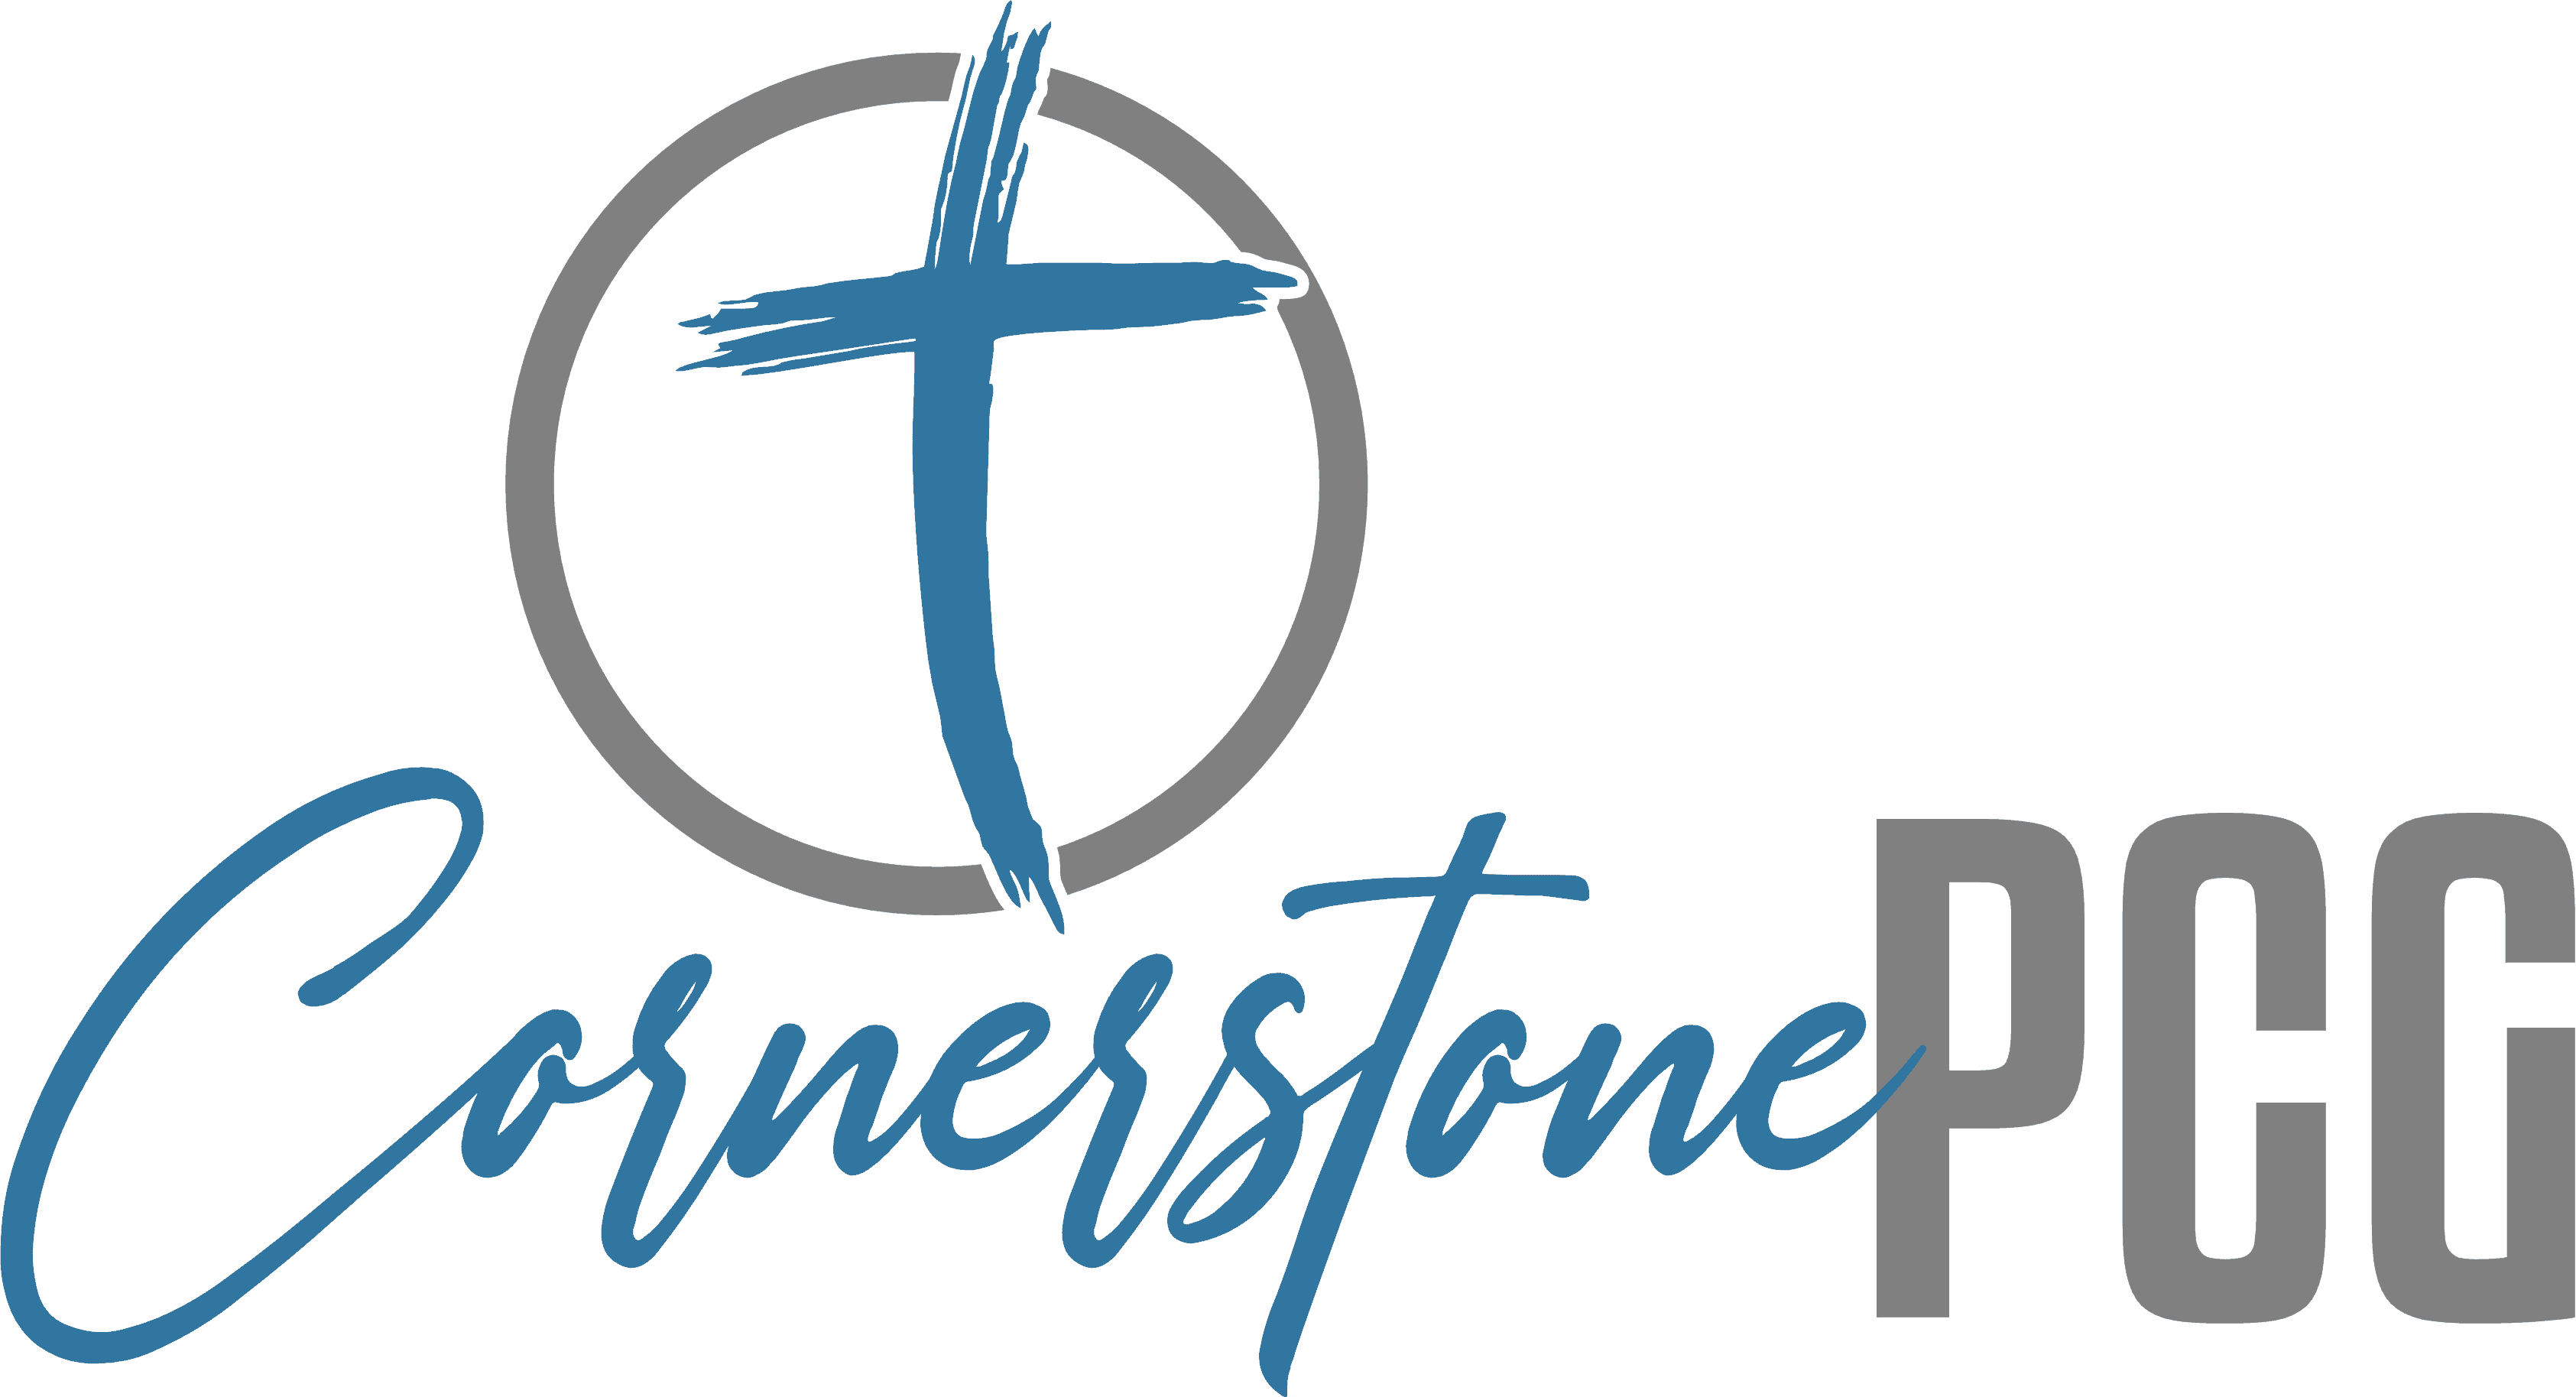 CornerstonePCG Logo